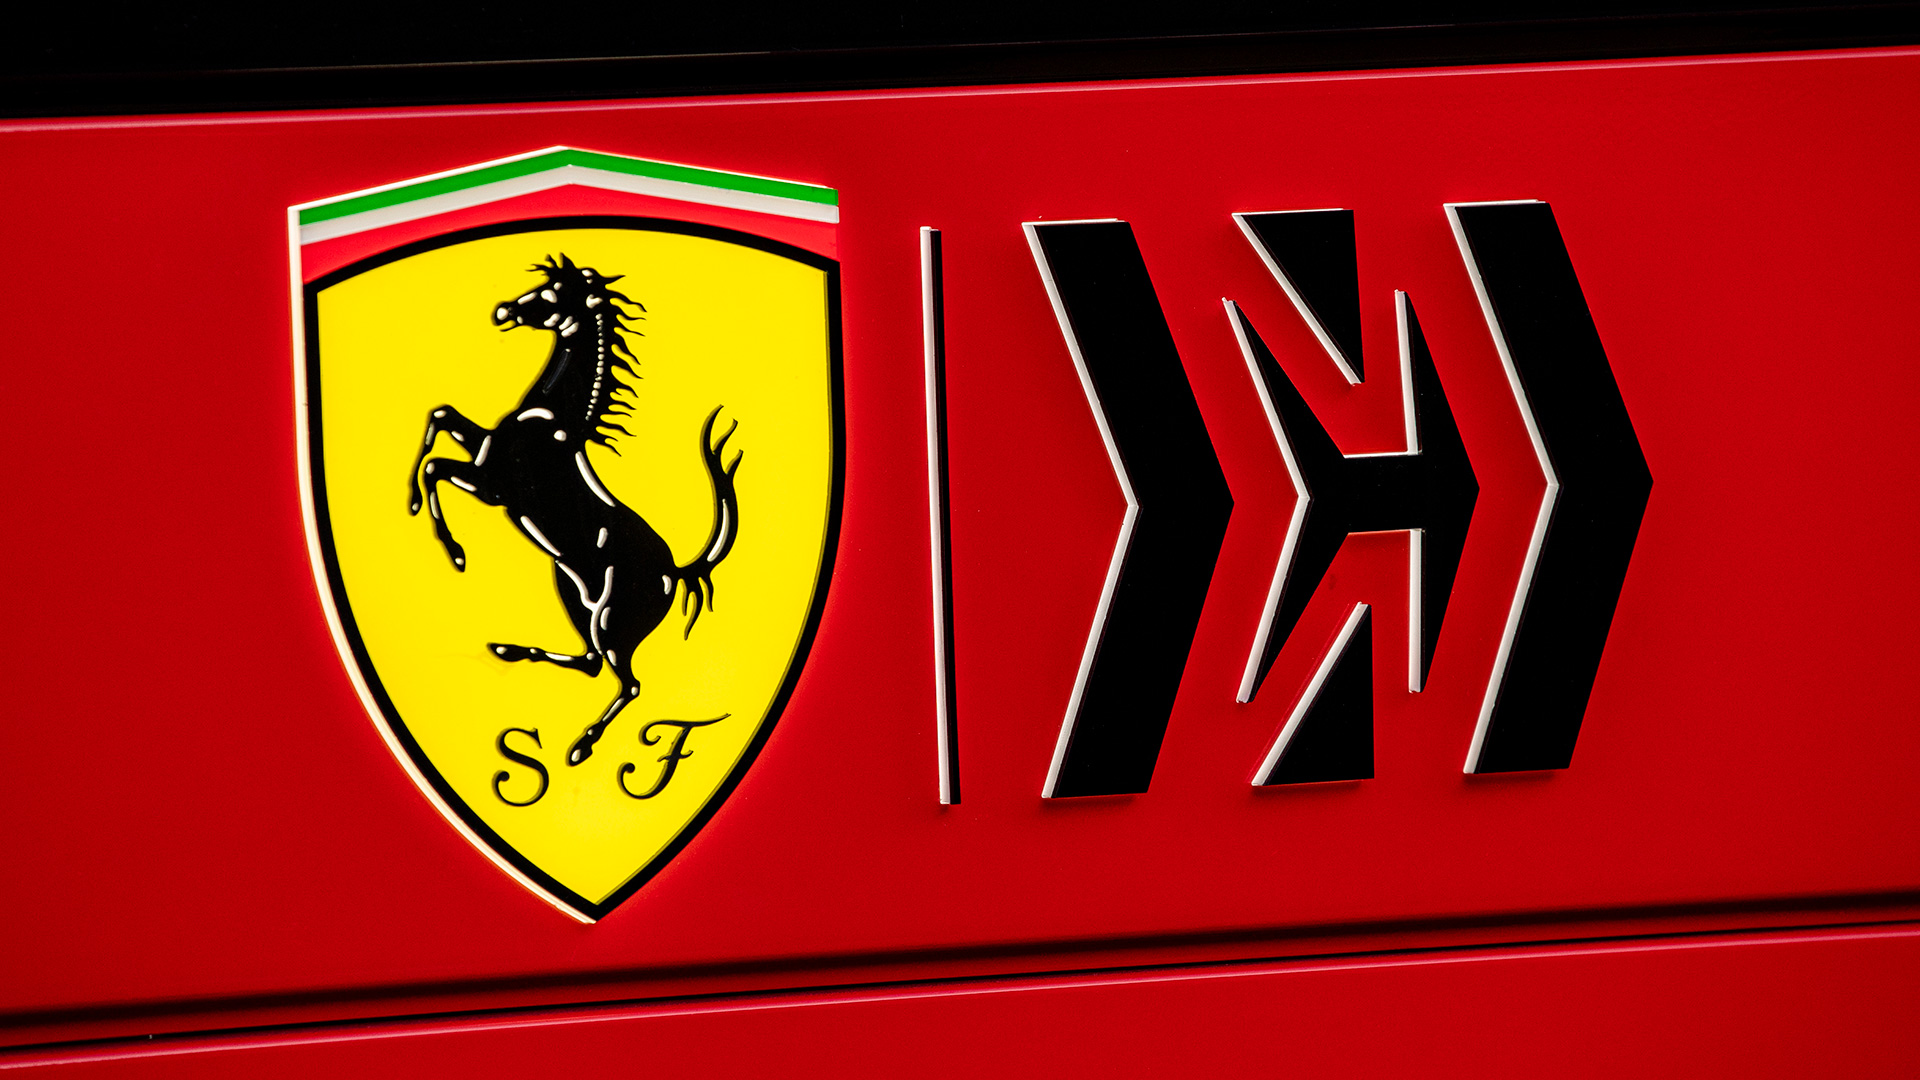 Watch Live As Ferrari Reveal Their New F1 Car For The Sf21